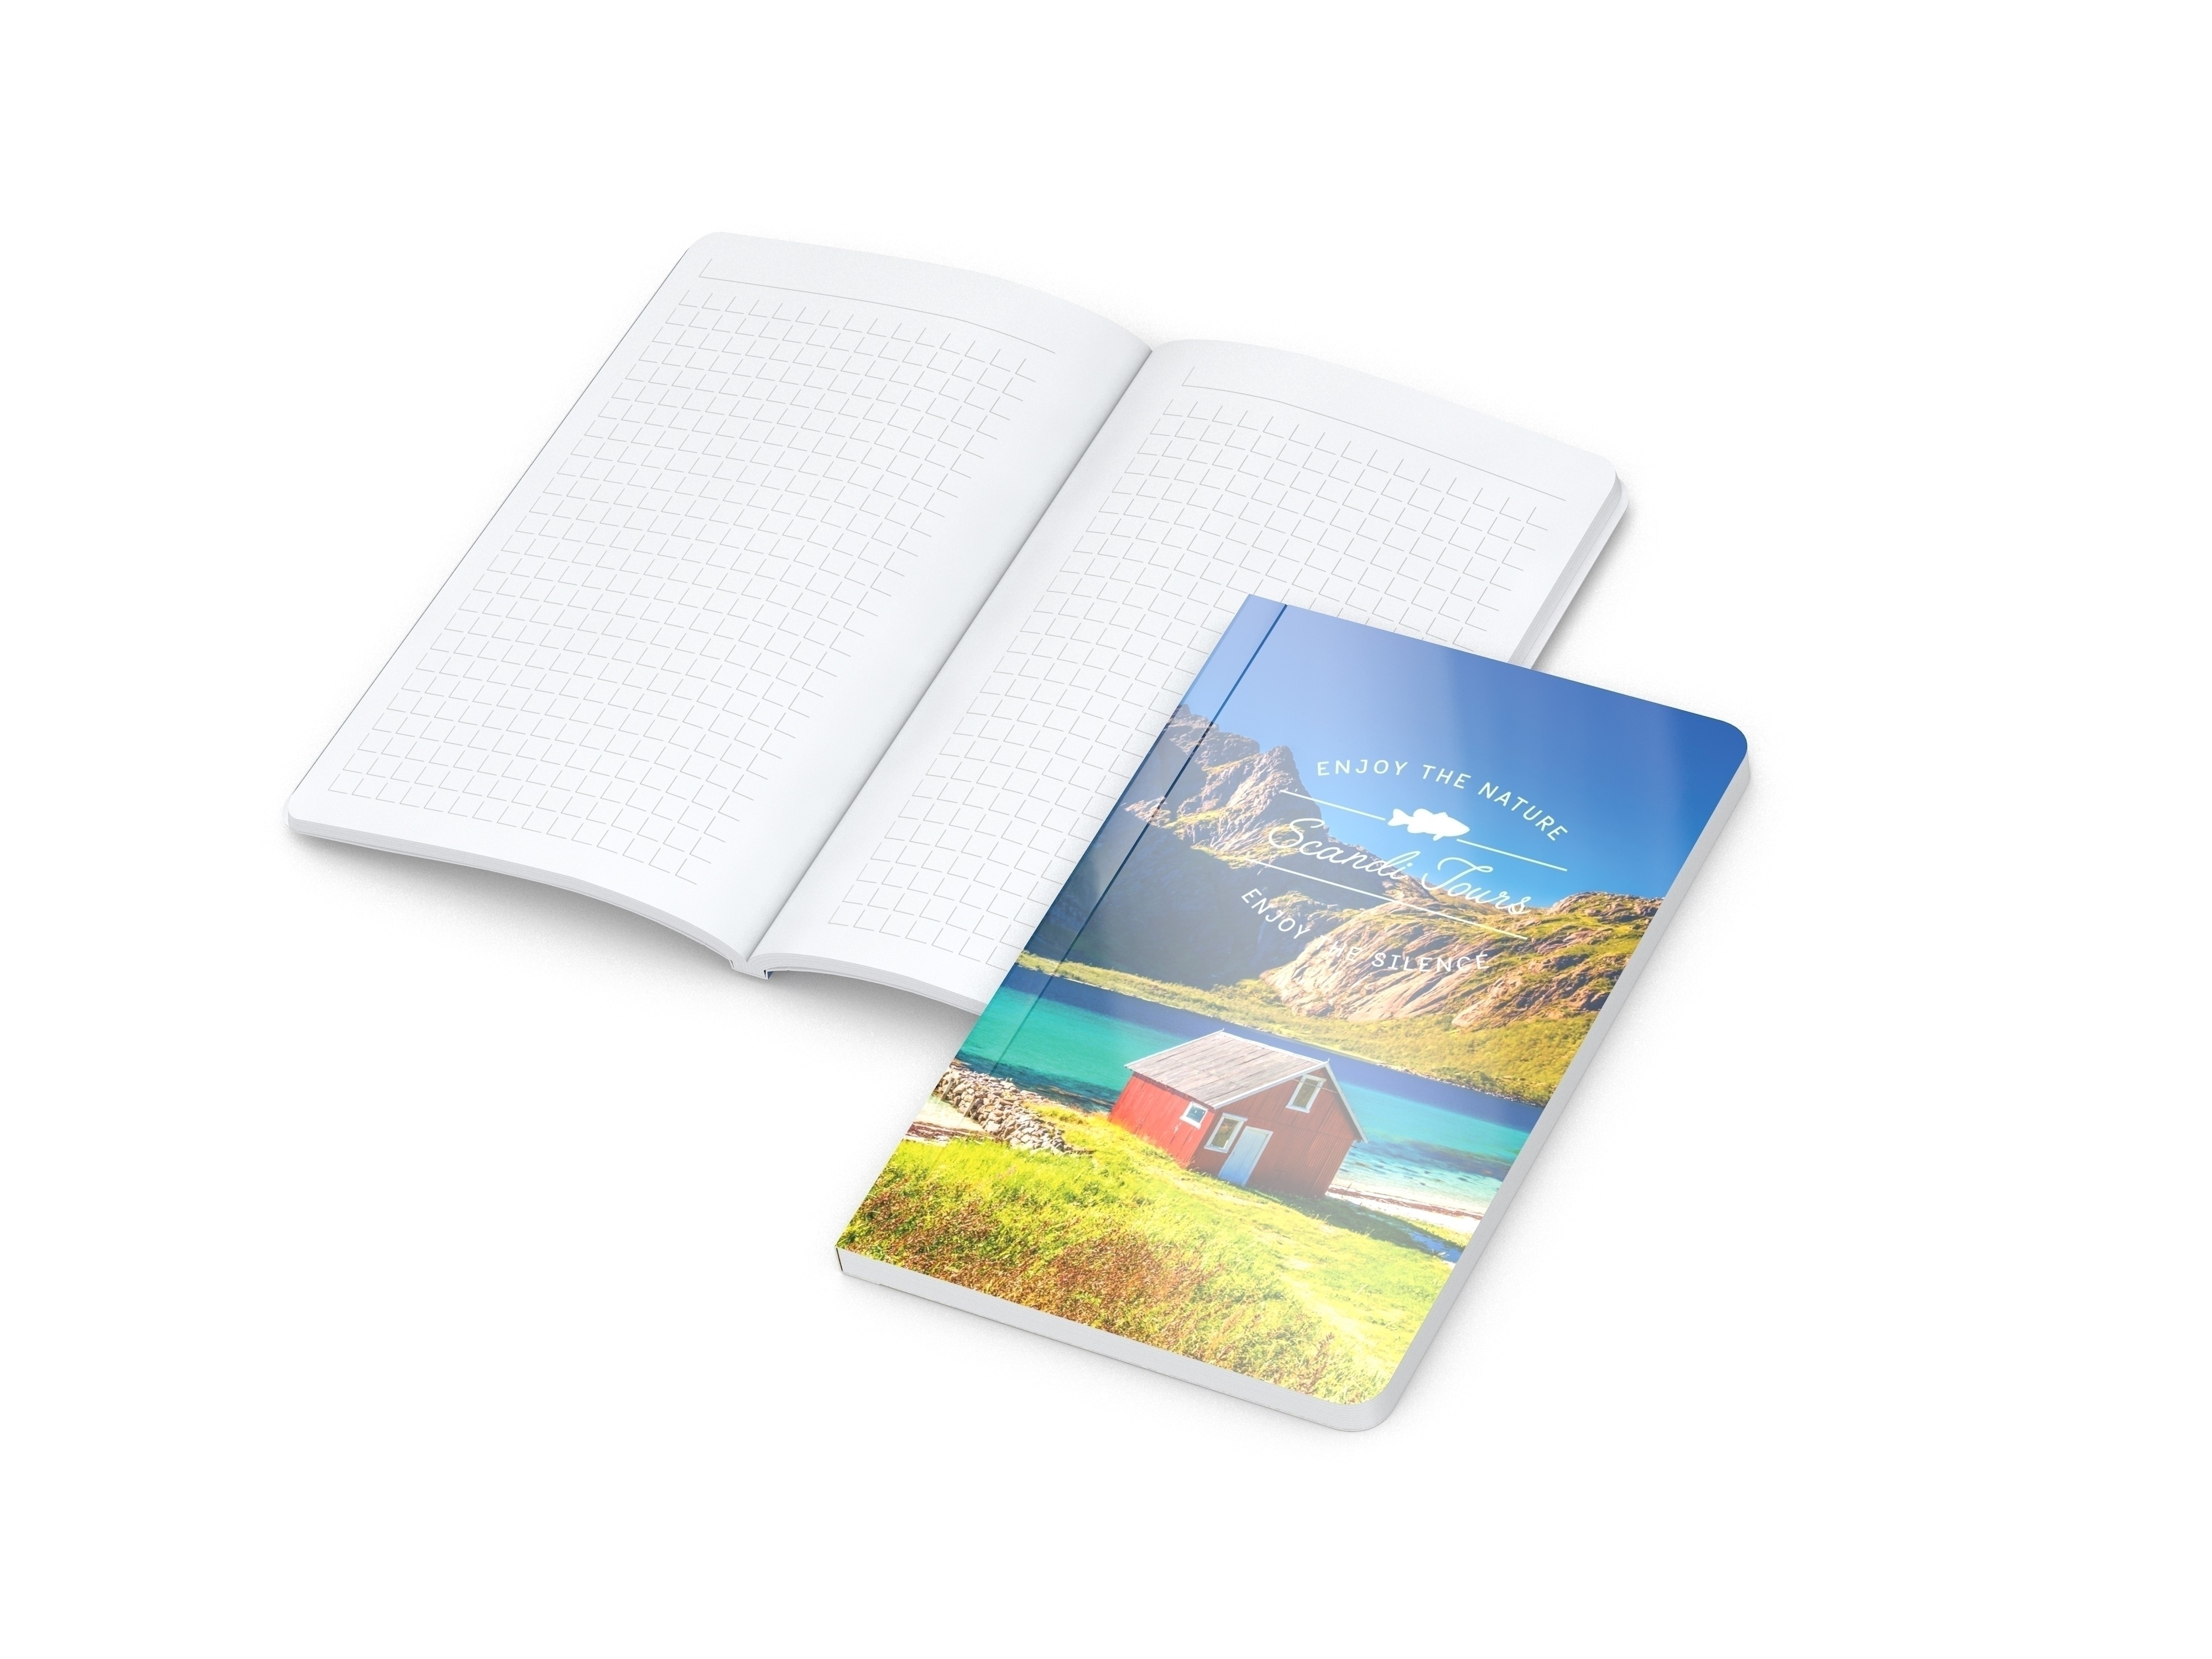 Business-Notizbücher - fest gebunden Copy-Book White Pocket bestseller, 4C-Digital, gloss-individuell